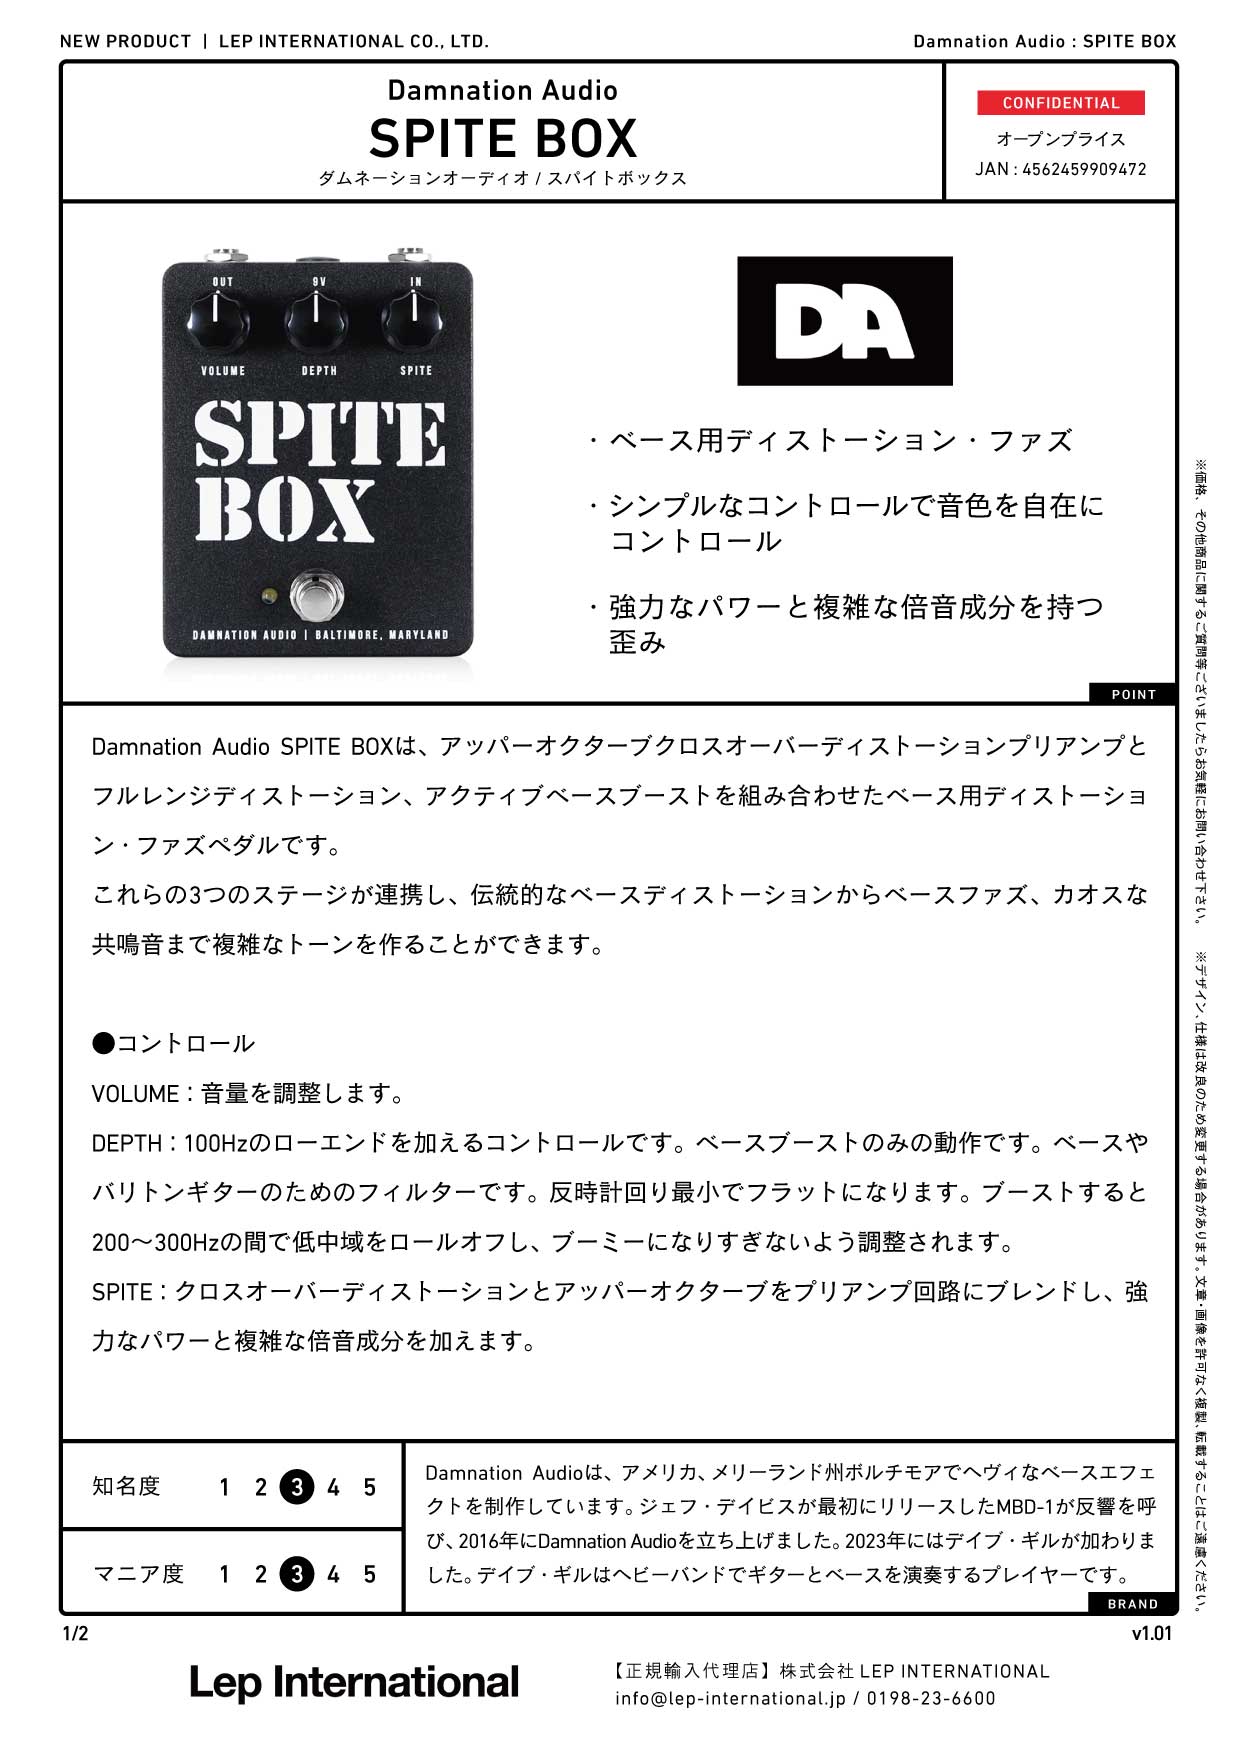 Damnation Audio / SPITE BOX